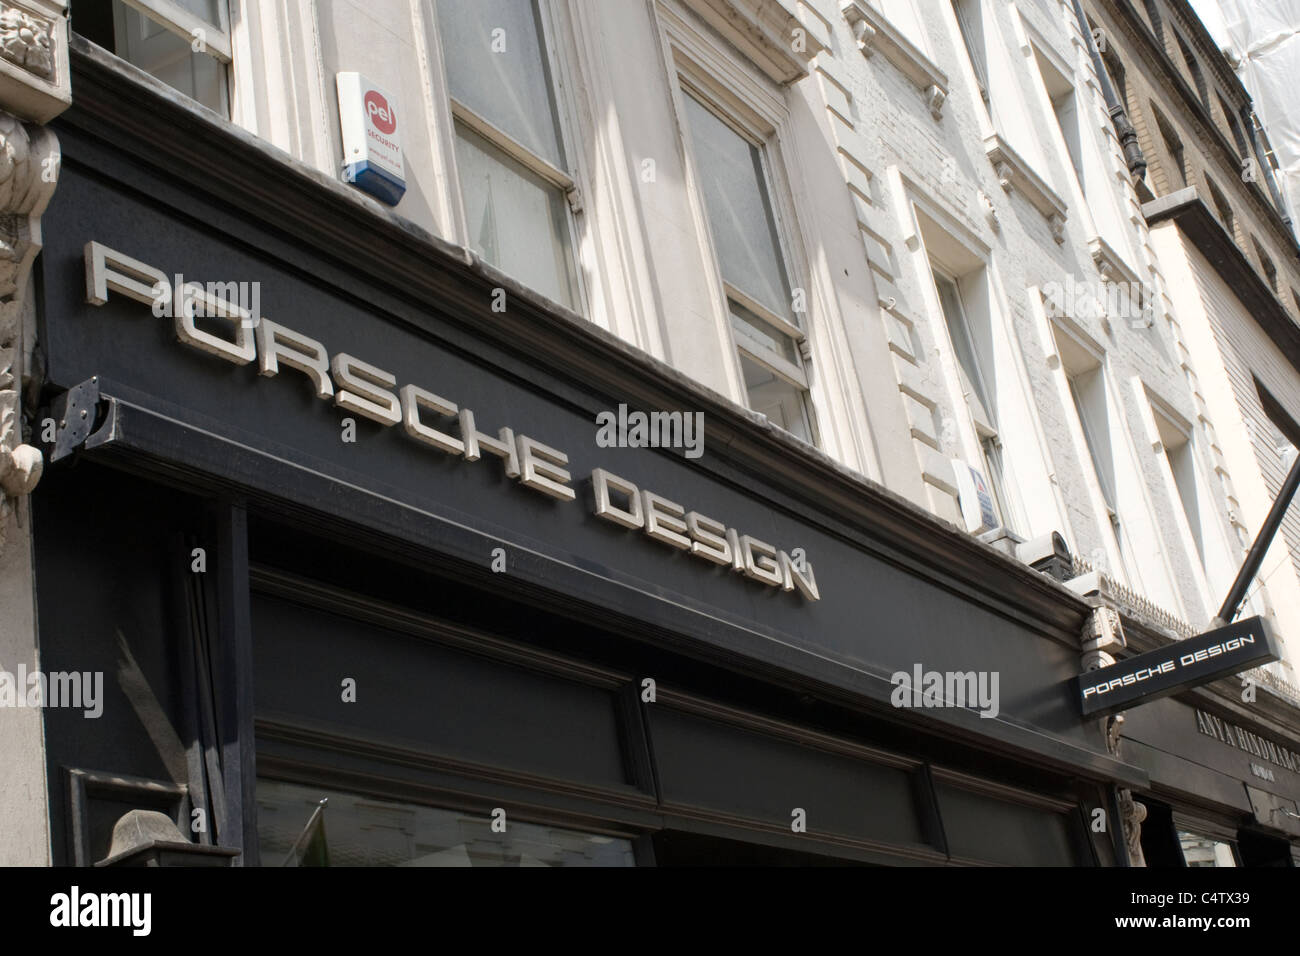 London Mayfair Bond Street Porsche Design sunglasses watches trainers shop store sign street scene Stock Photo